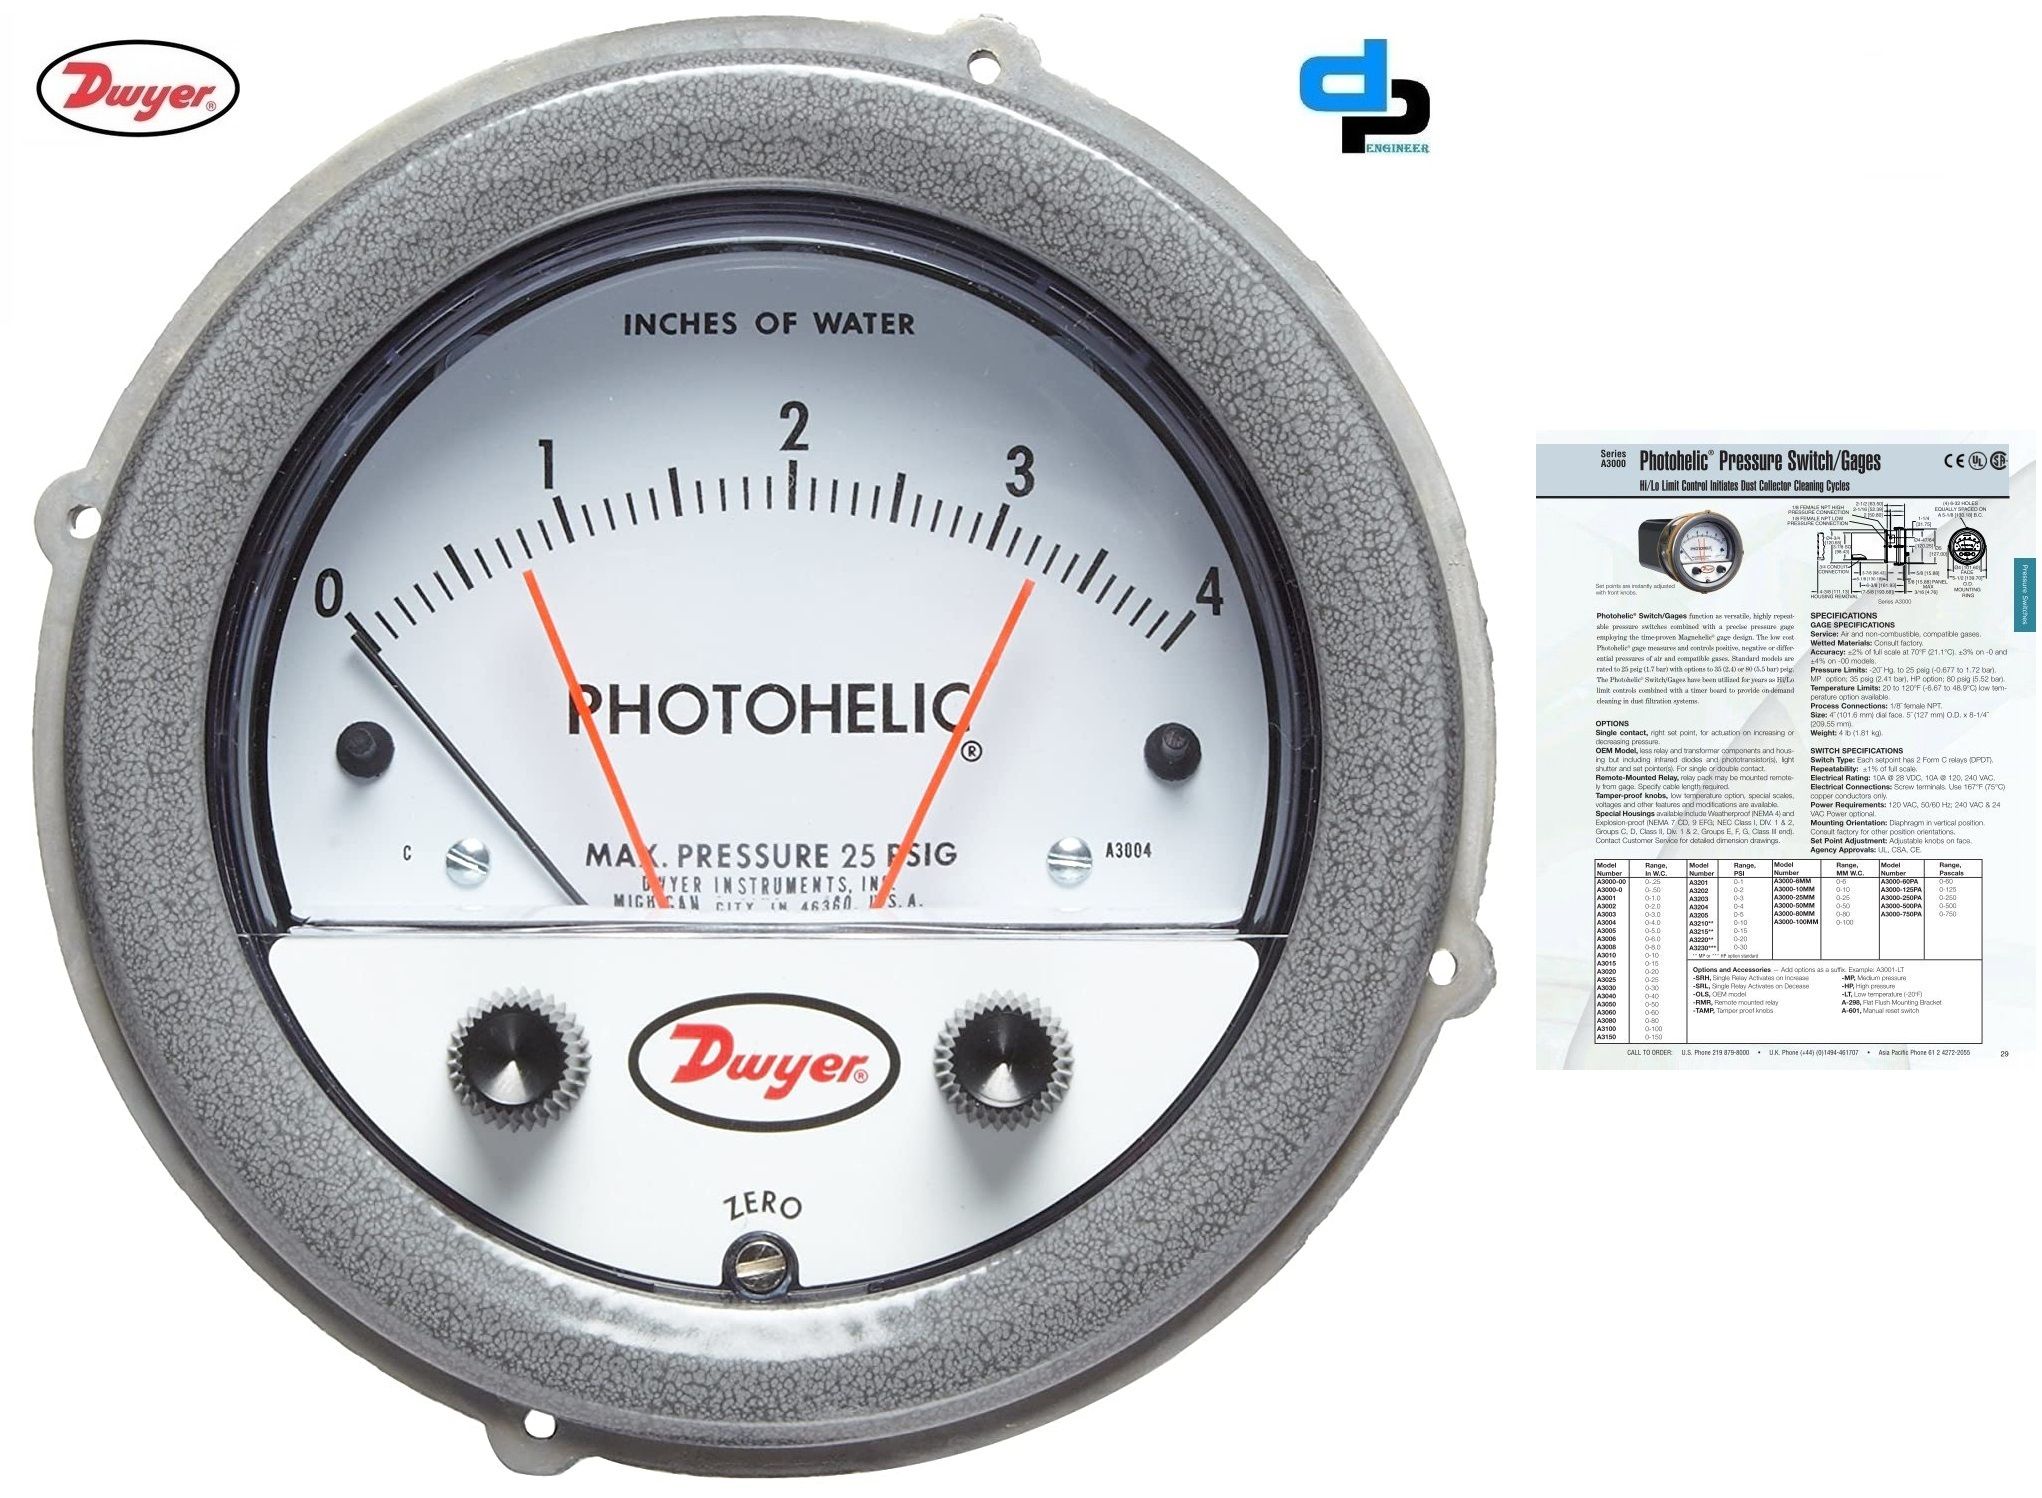 Dwyer A3000-30KPA Photohelic Pressure Switch Gauge